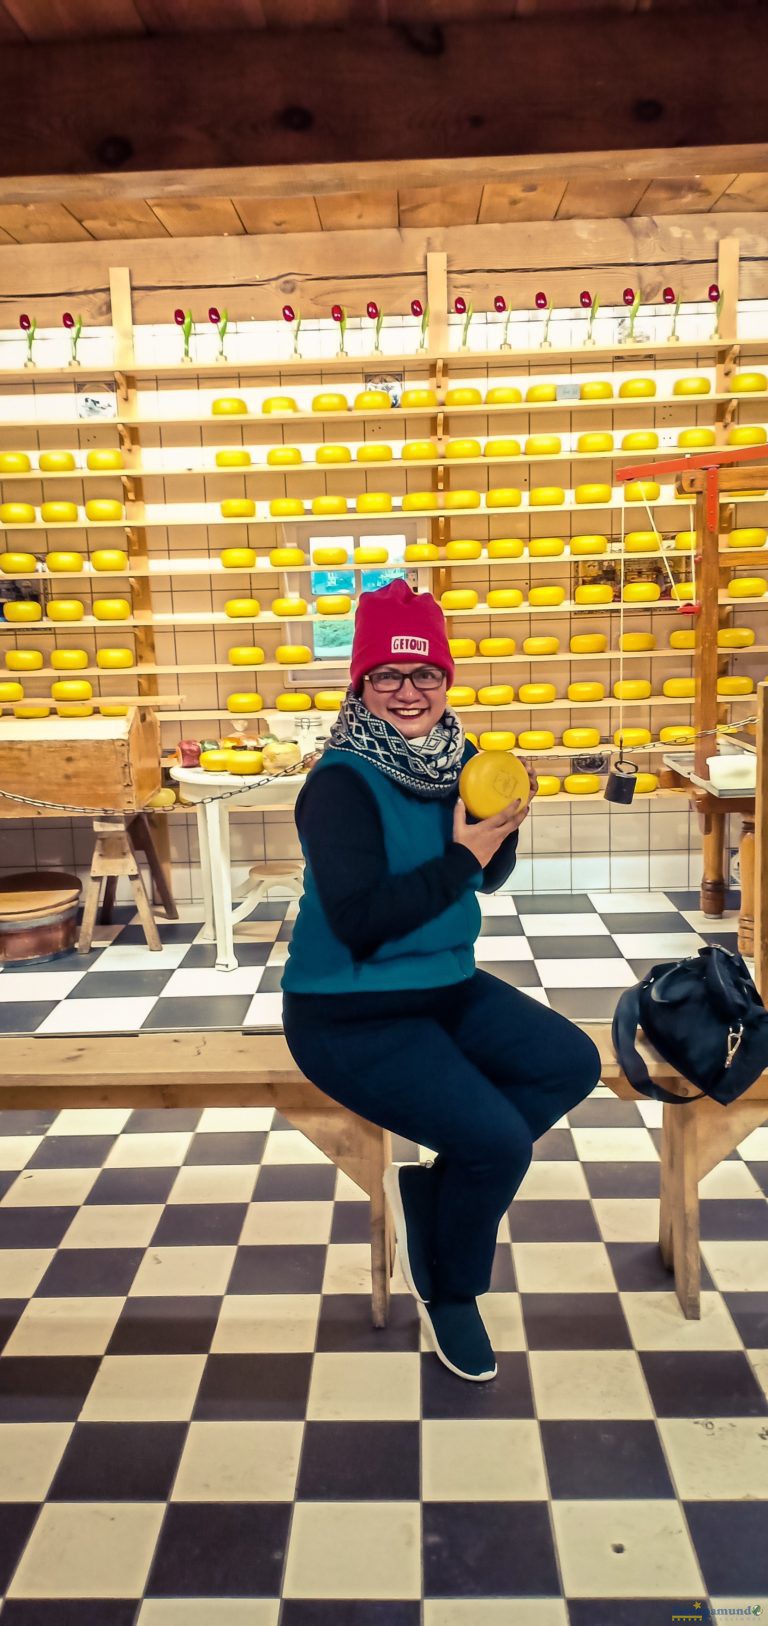 Volendam’s Cheese Factory